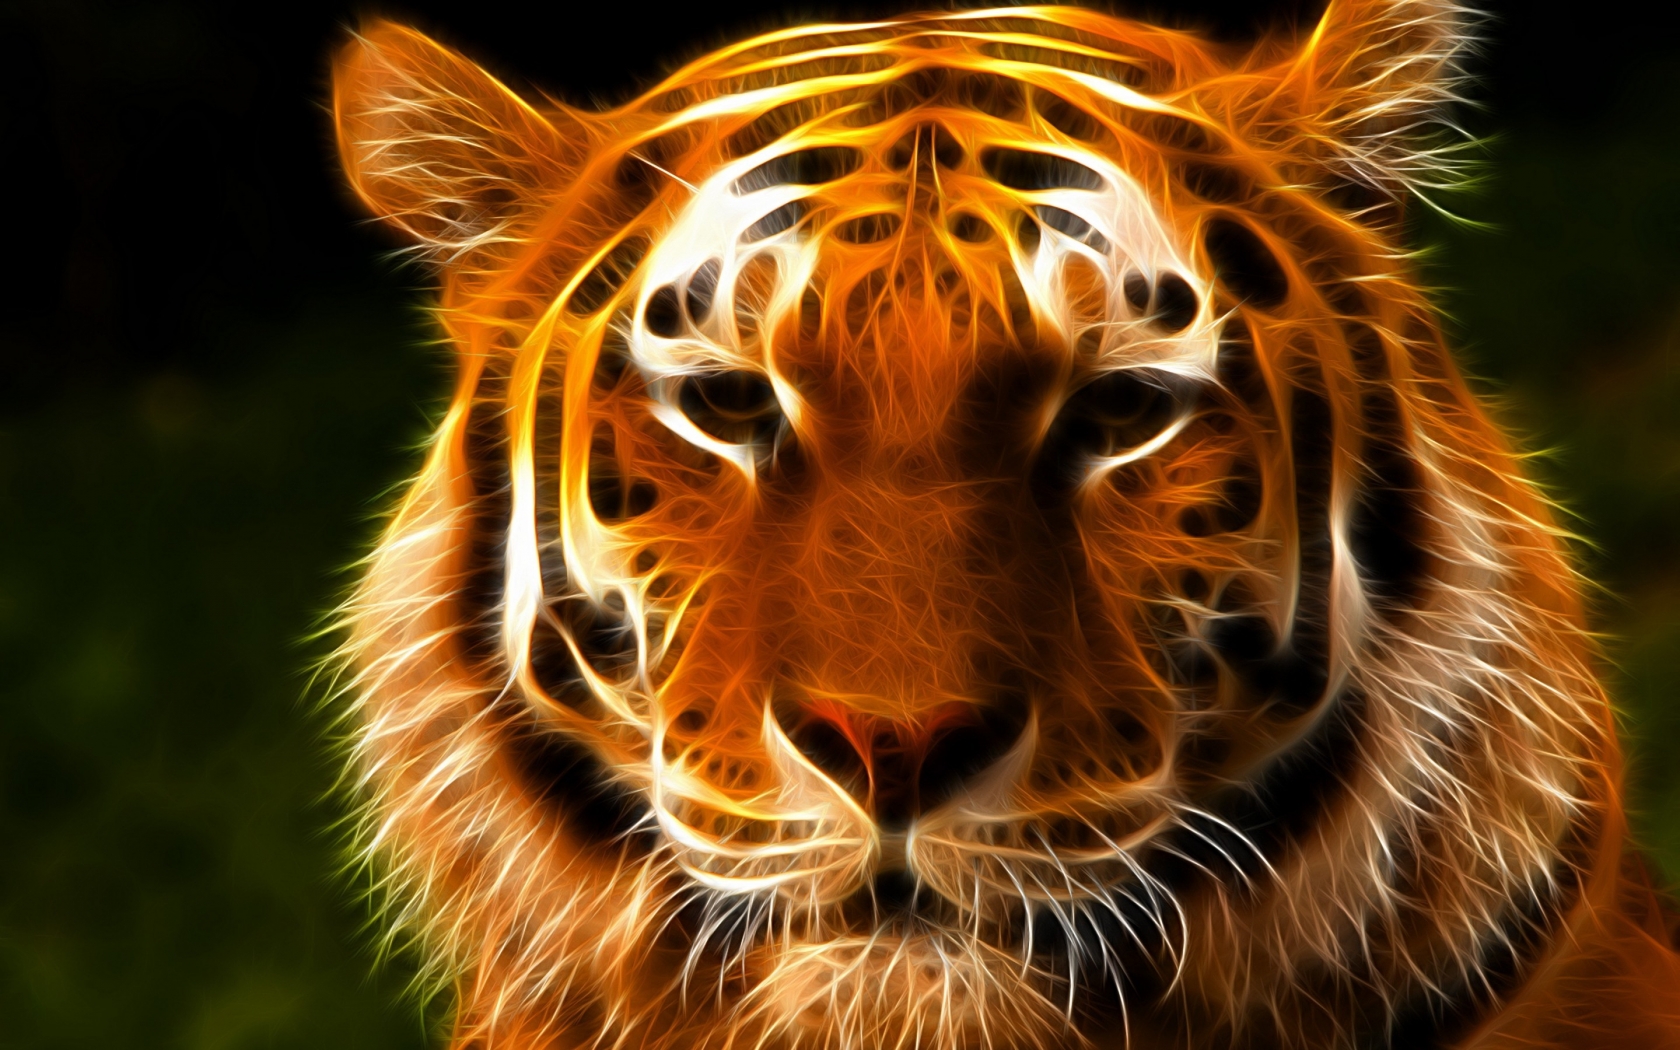 Tiger Face Art for 1680 x 1050 widescreen resolution